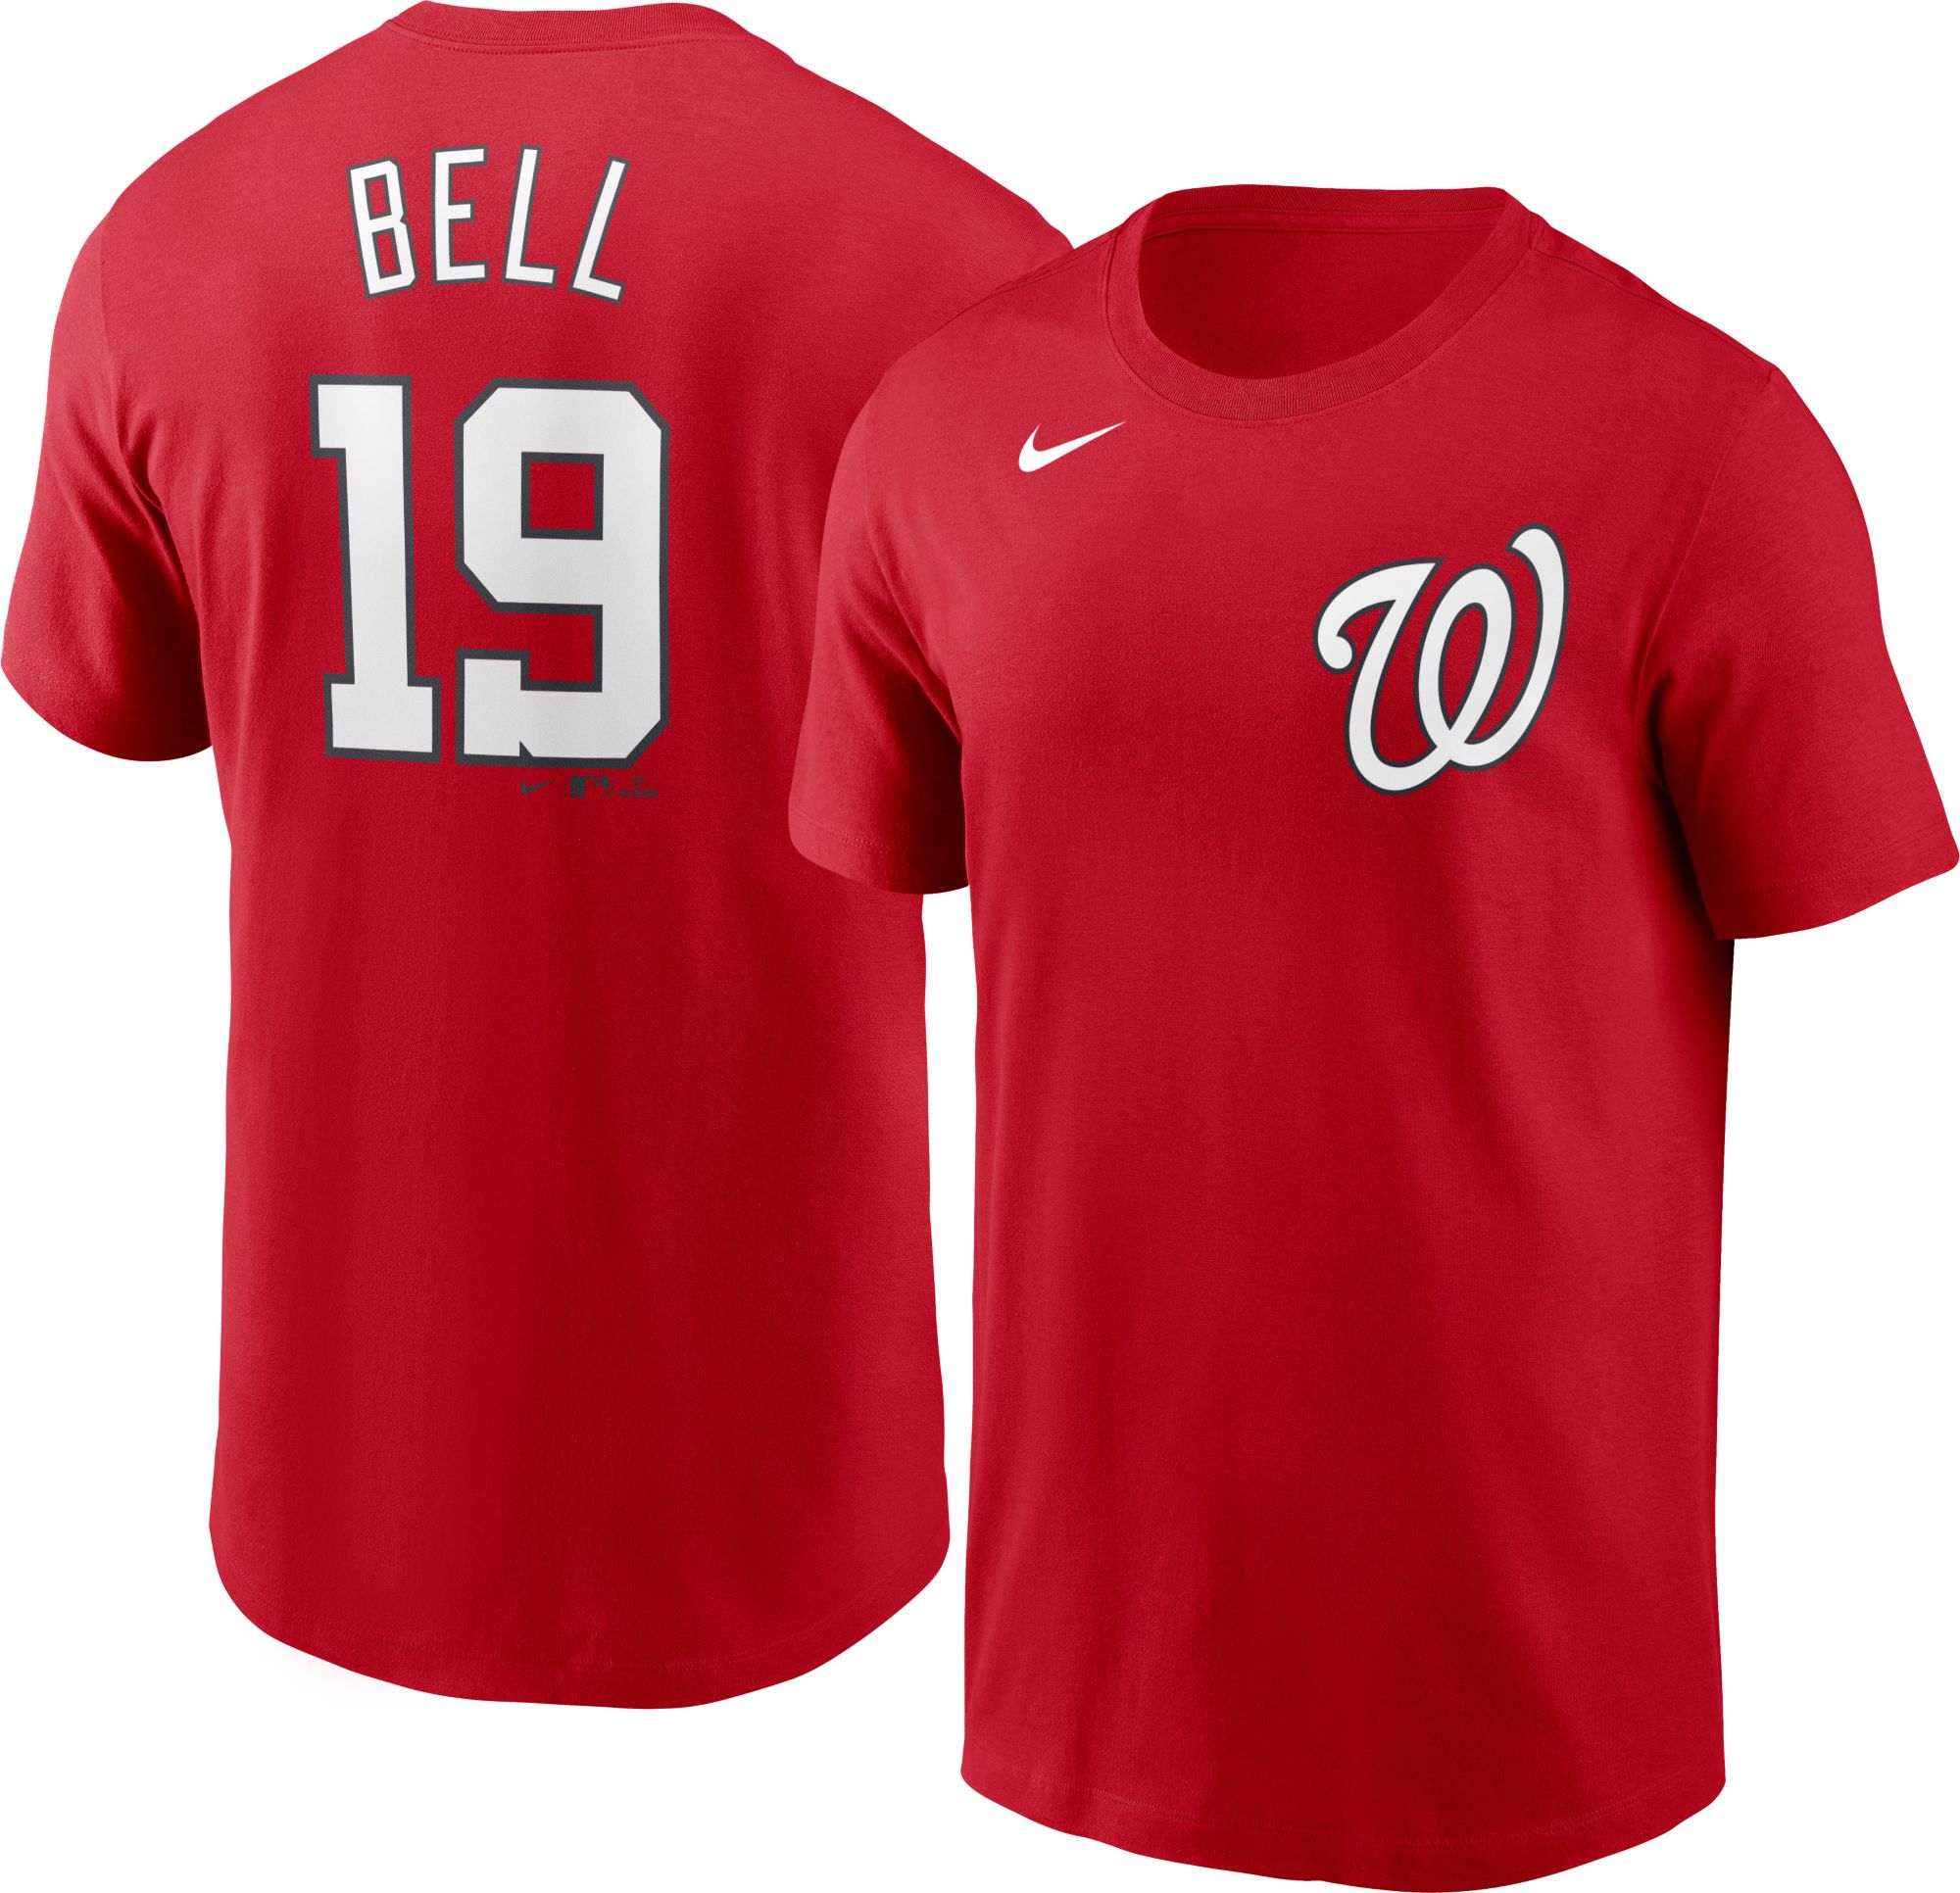 Nike / Men's Washington Nationals Josh Bell #19 Red T-Shirt